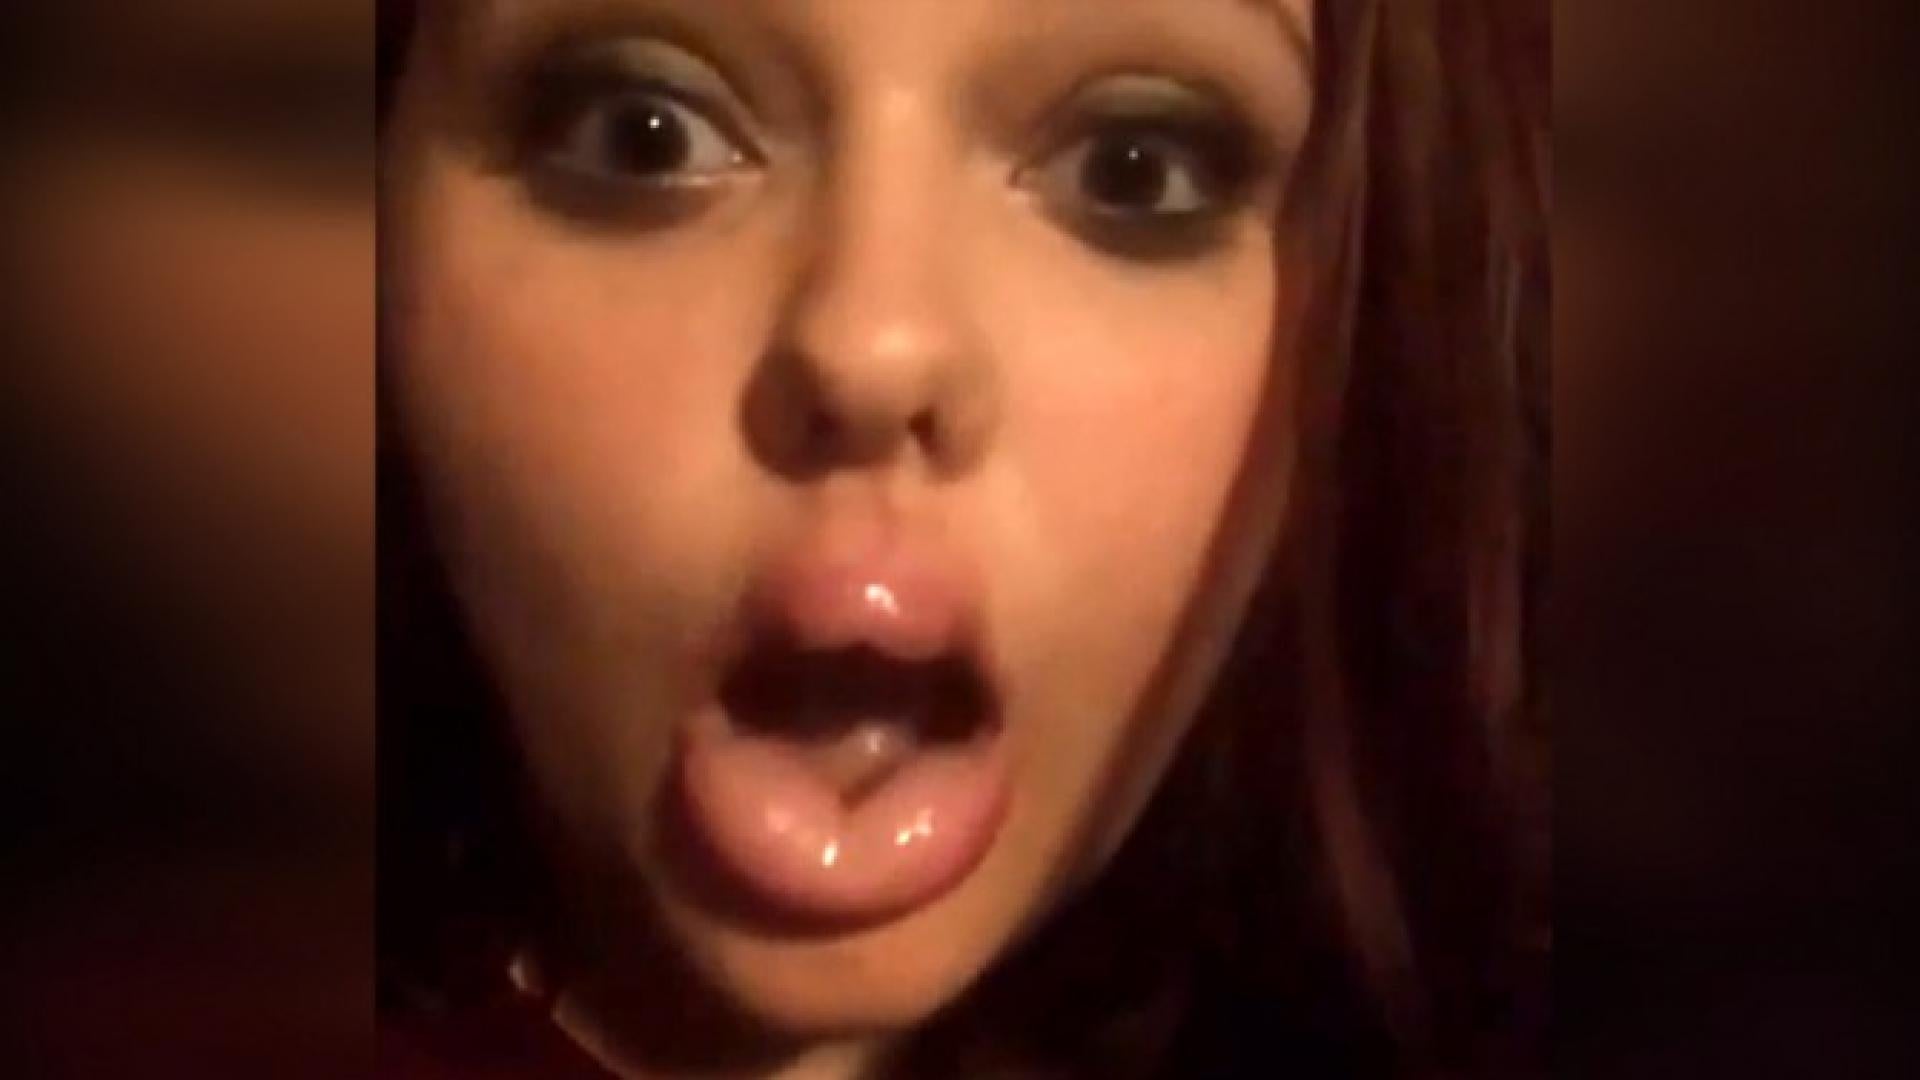 Kylie Jenner Lip Challenge Aftermath